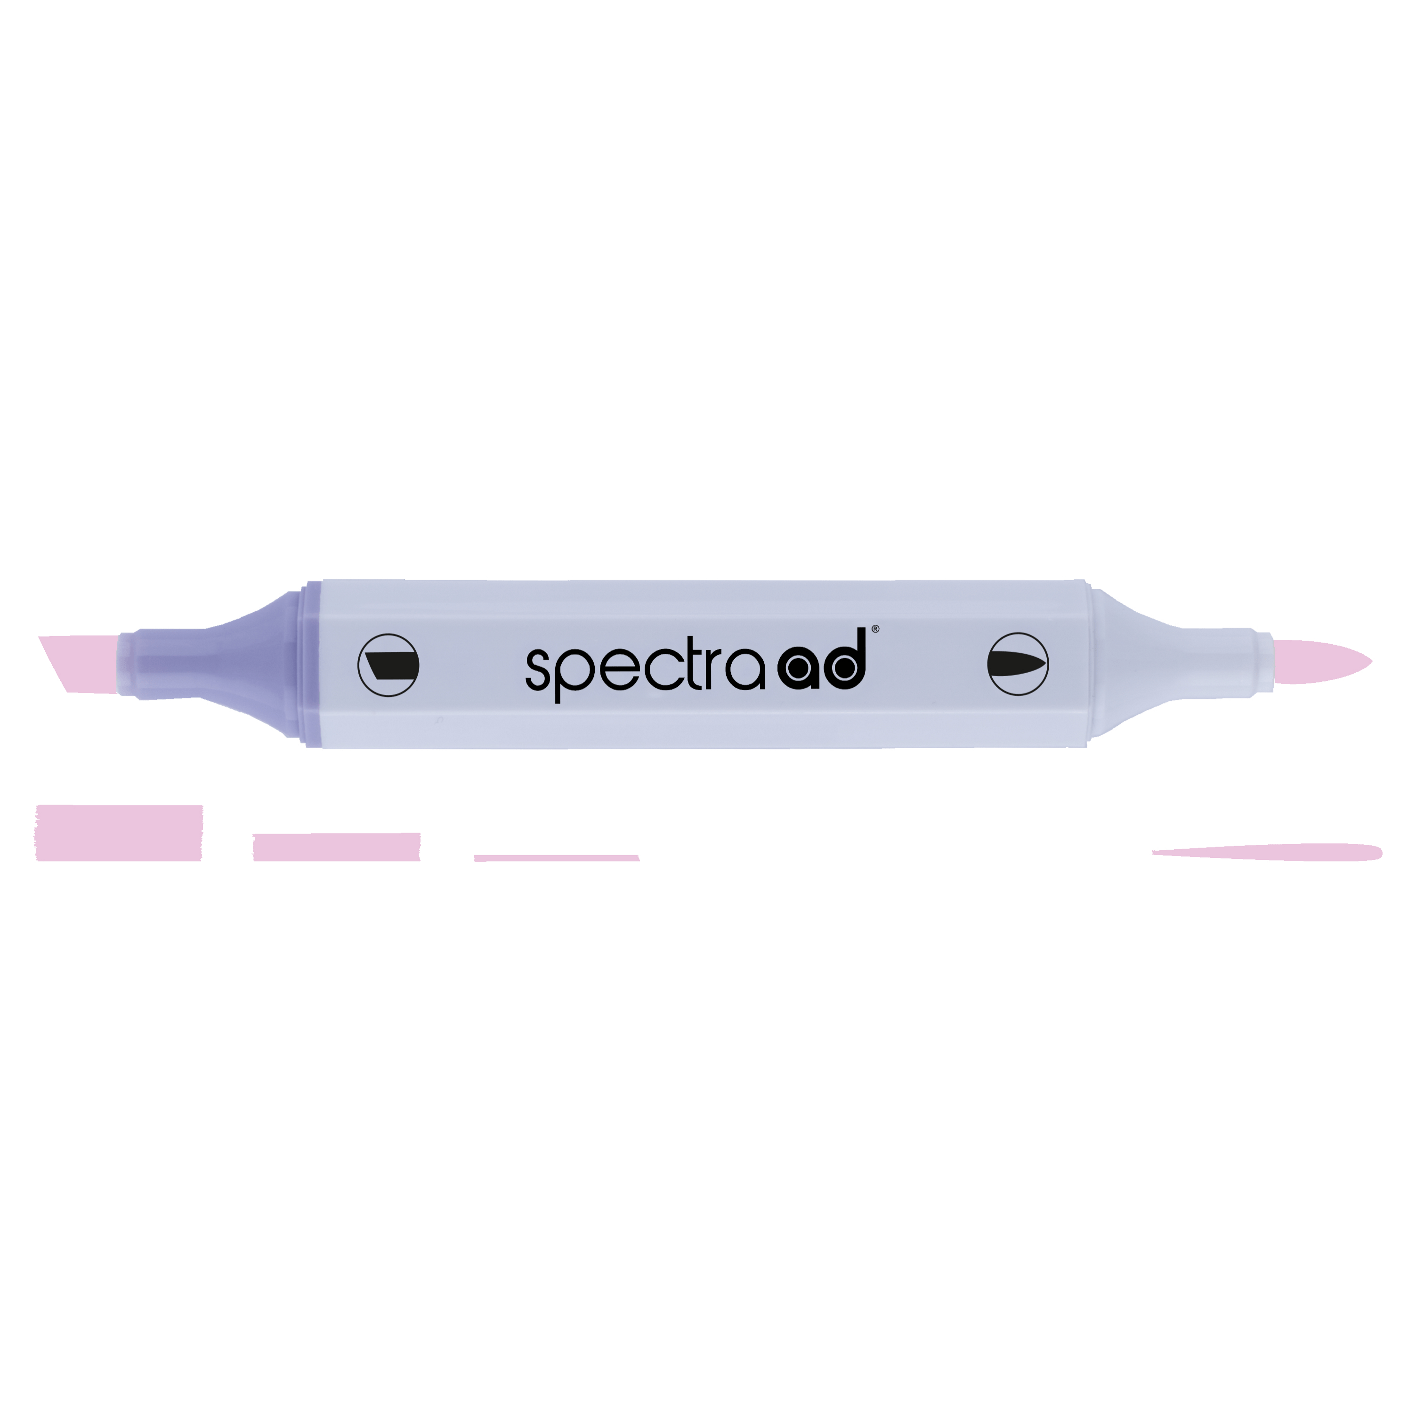 AD Marker Spectra Rose Petal